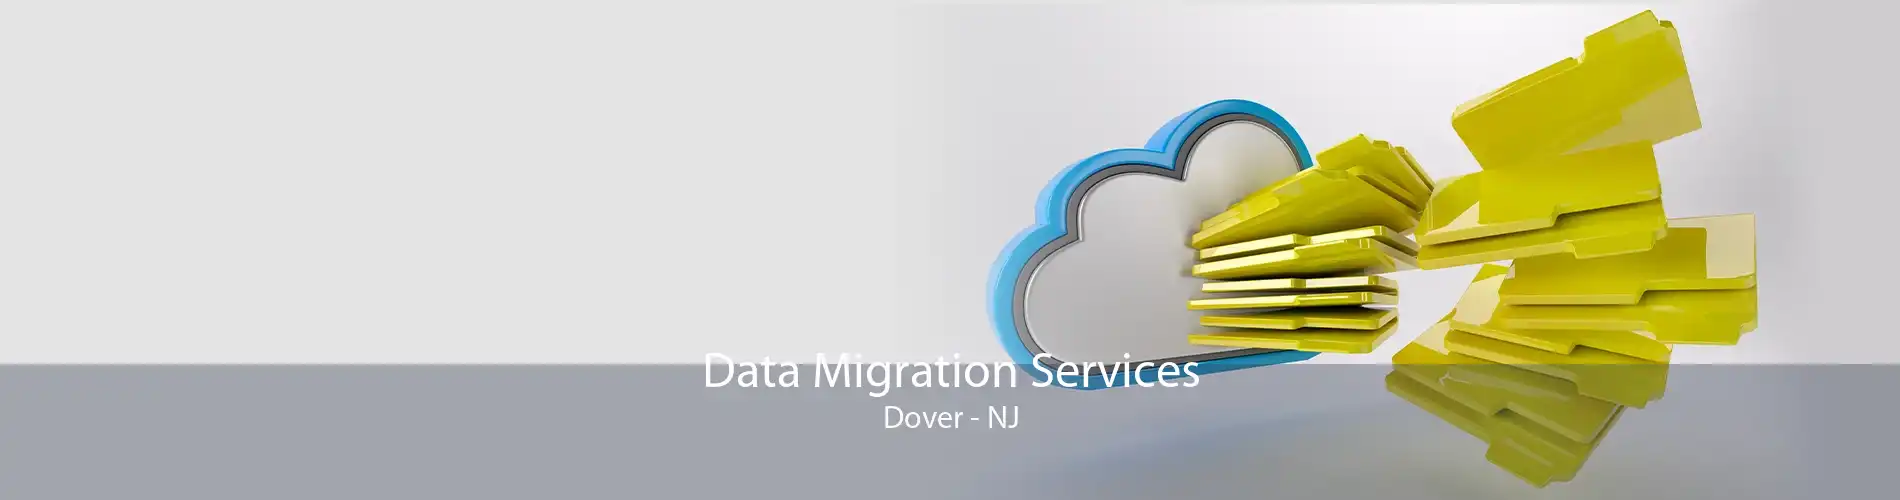 Data Migration Services Dover - NJ